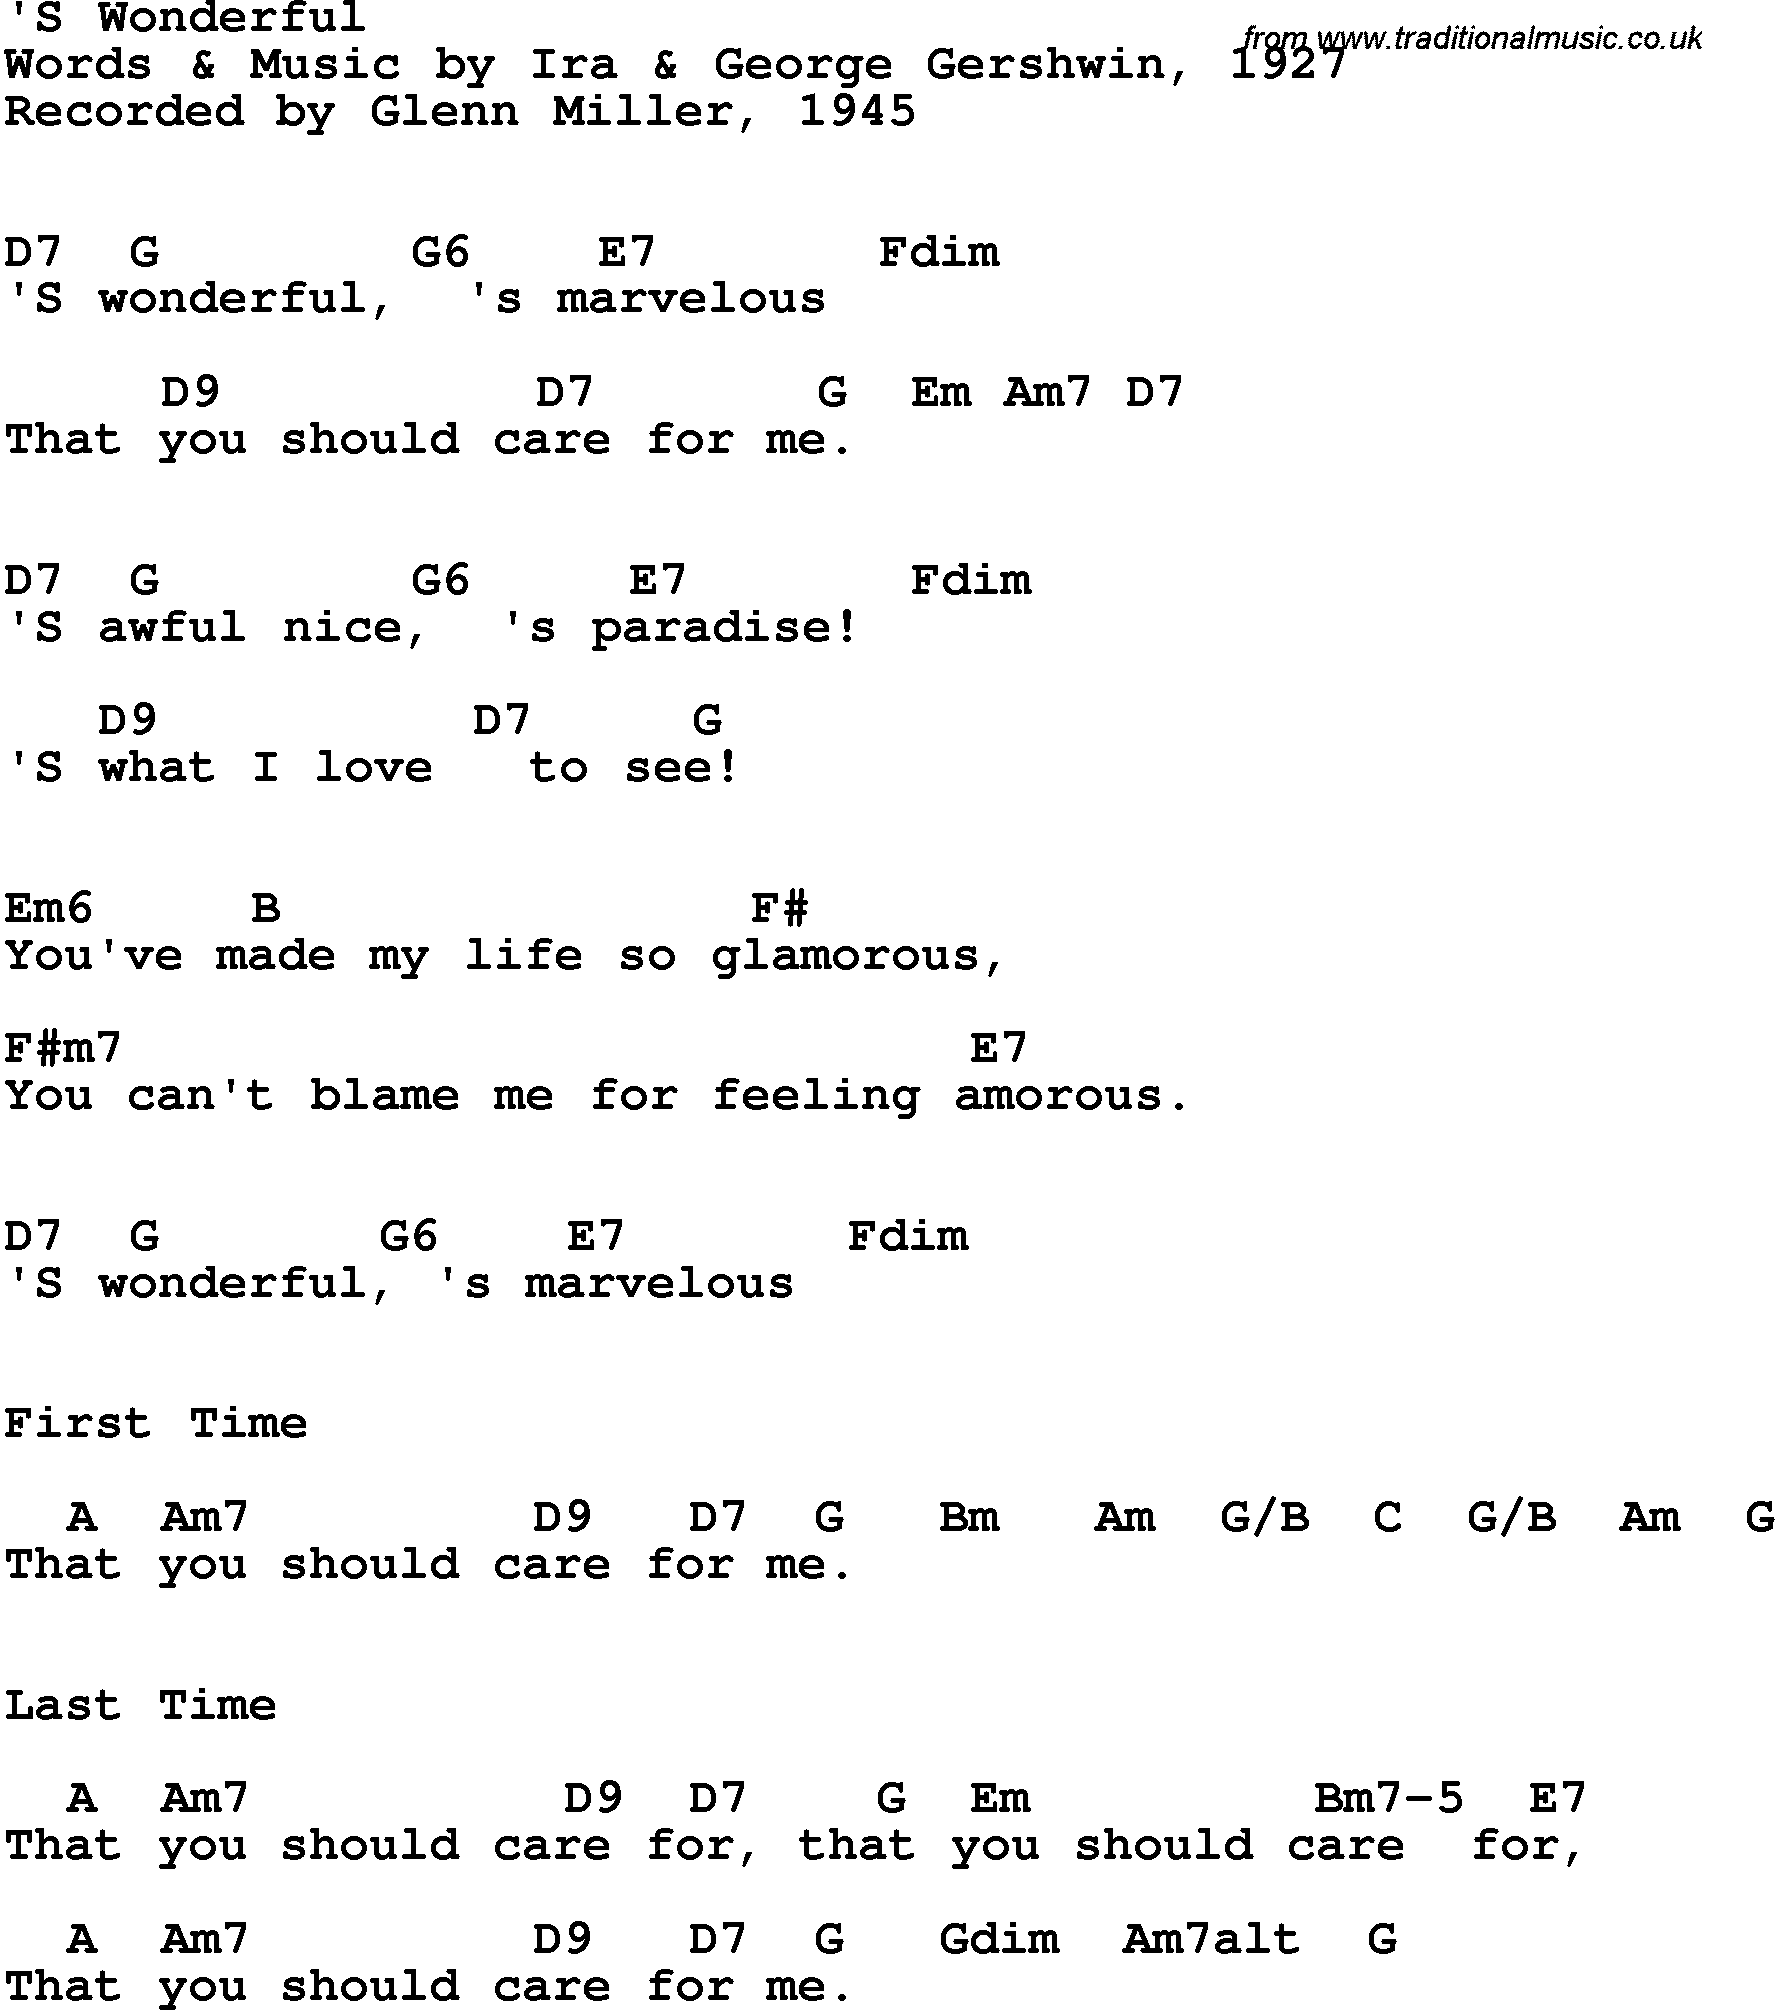 Song Lyrics with guitar chords for 'S Wonderful - Glenn Miller, 1945